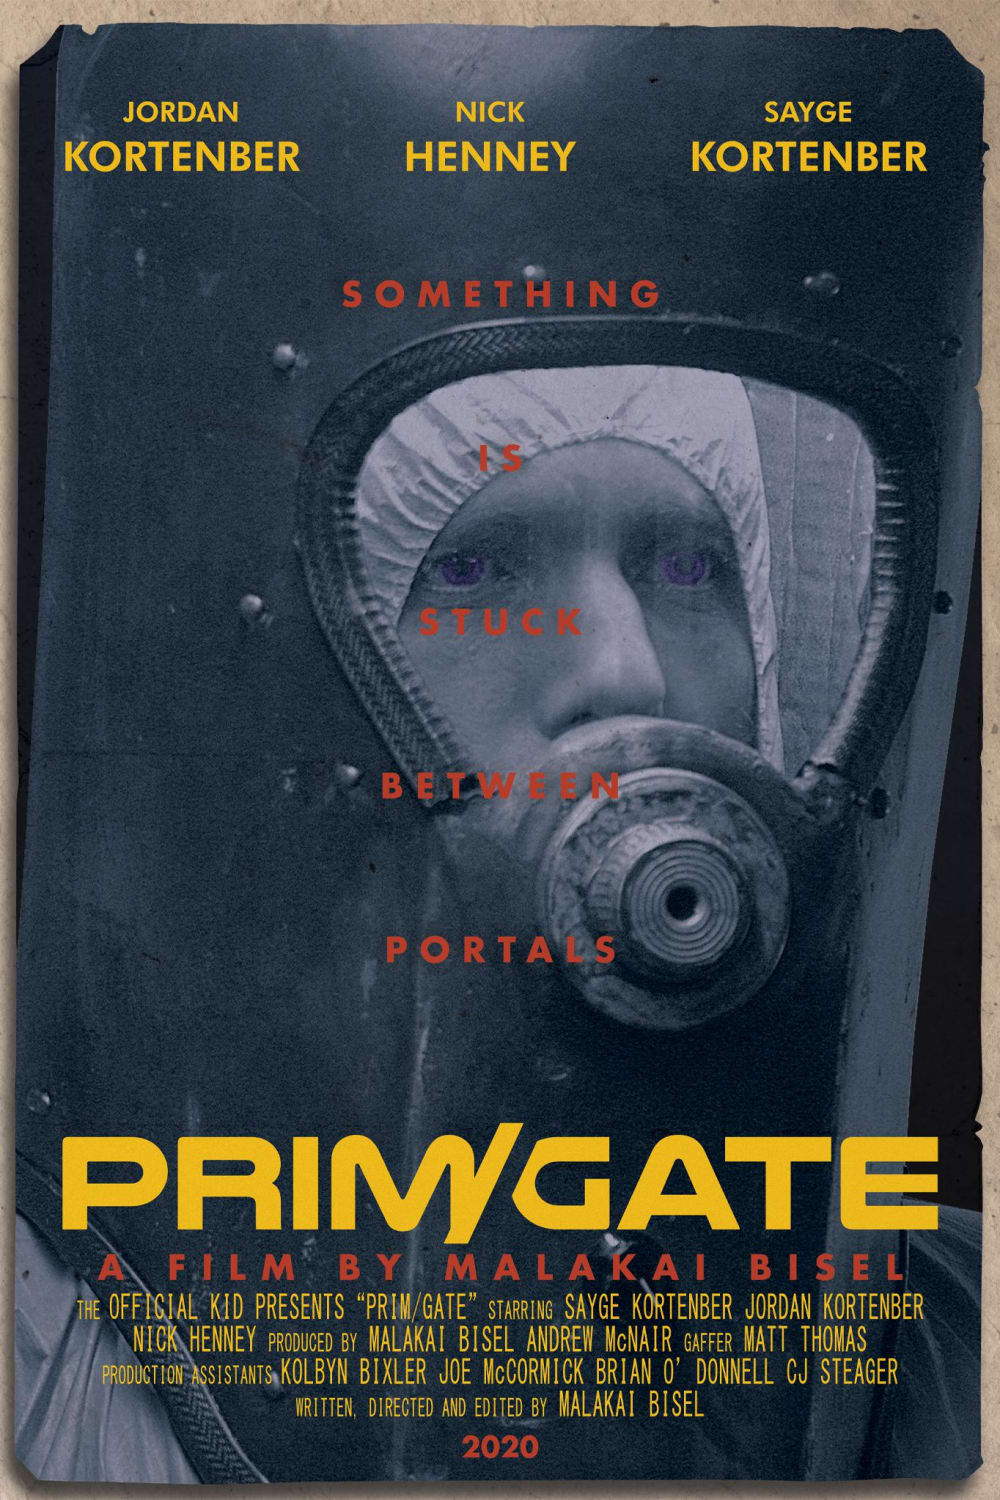 Poster I made for my sci-fi comedy short film, PRIM/GATE